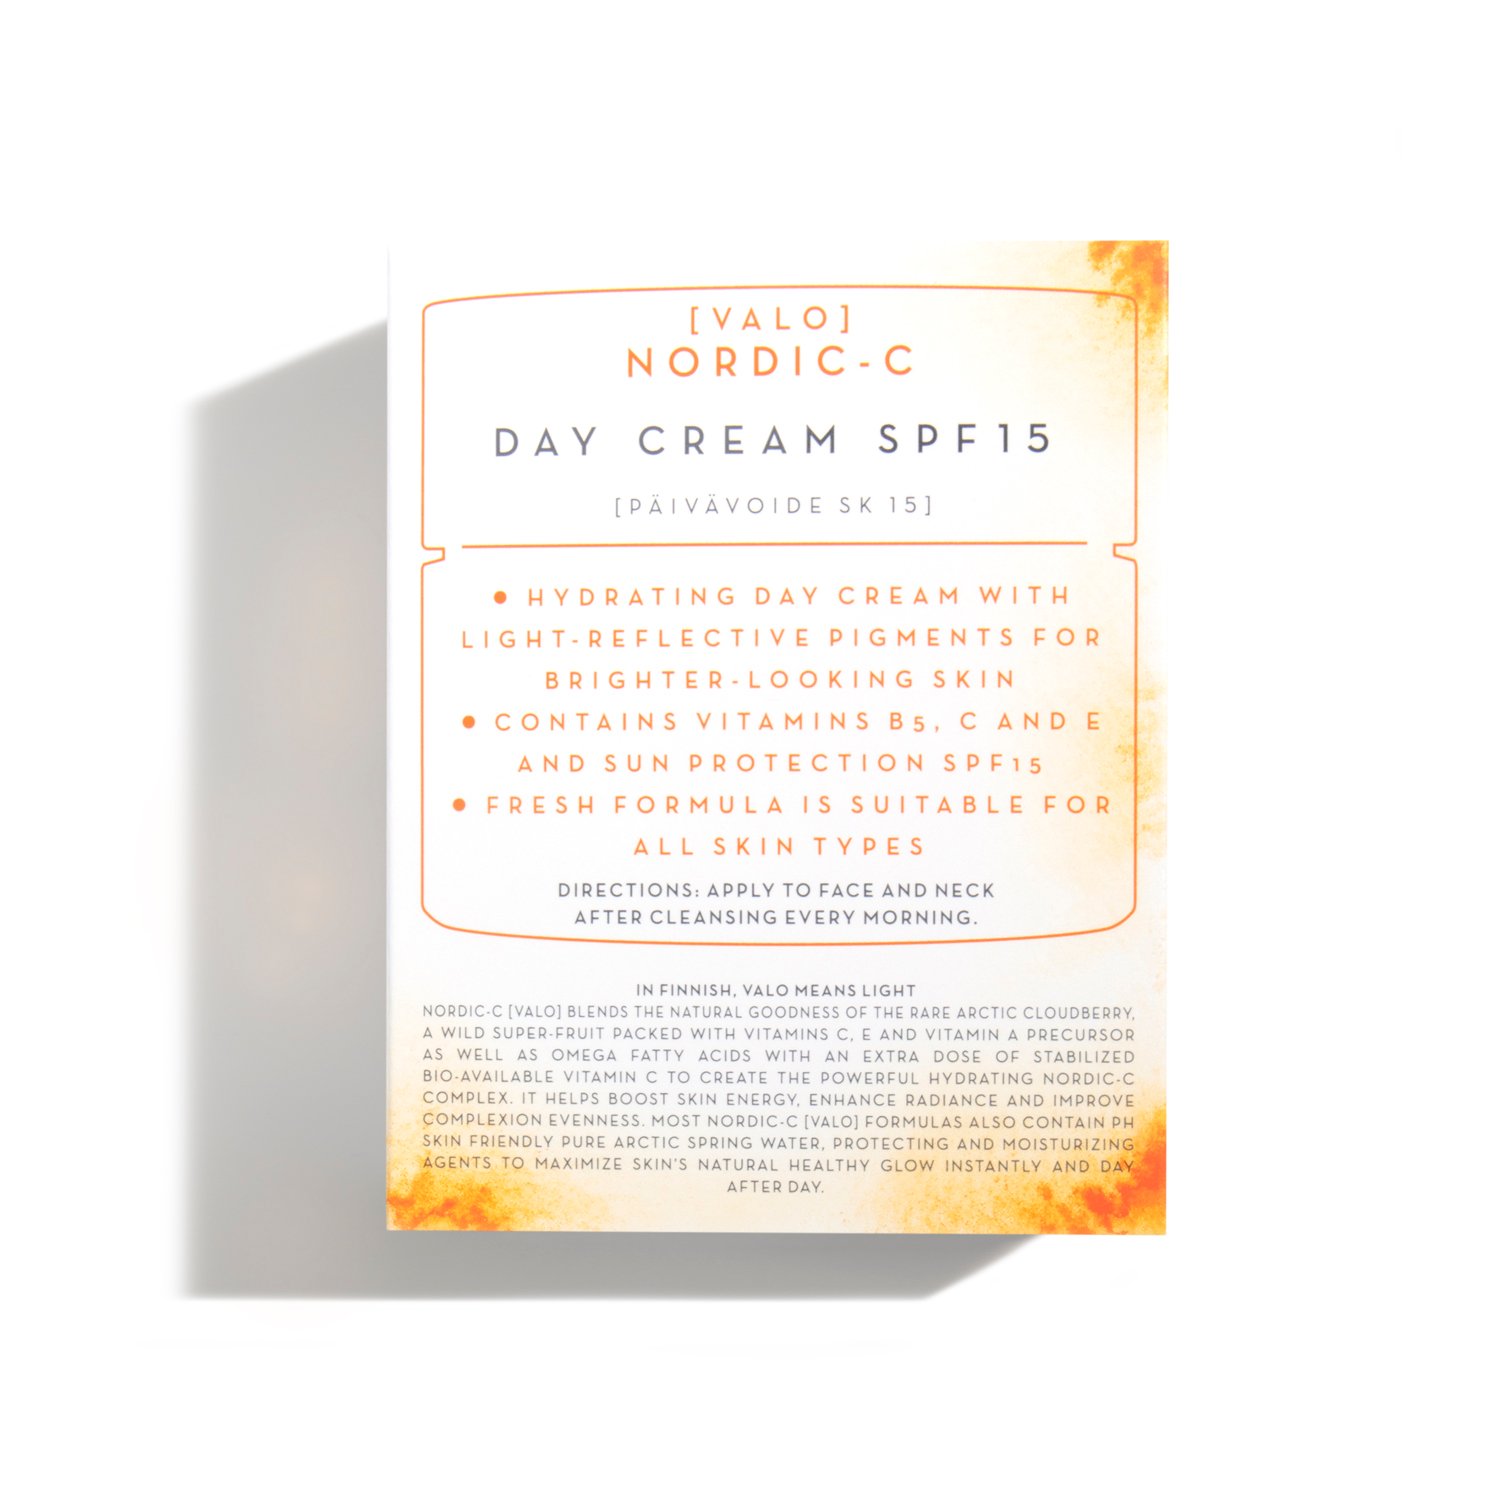 Дневной крем для сияния кожи Lumene Valo Day Cream, SPF 15, 50 мл (8000016446537) - фото 3